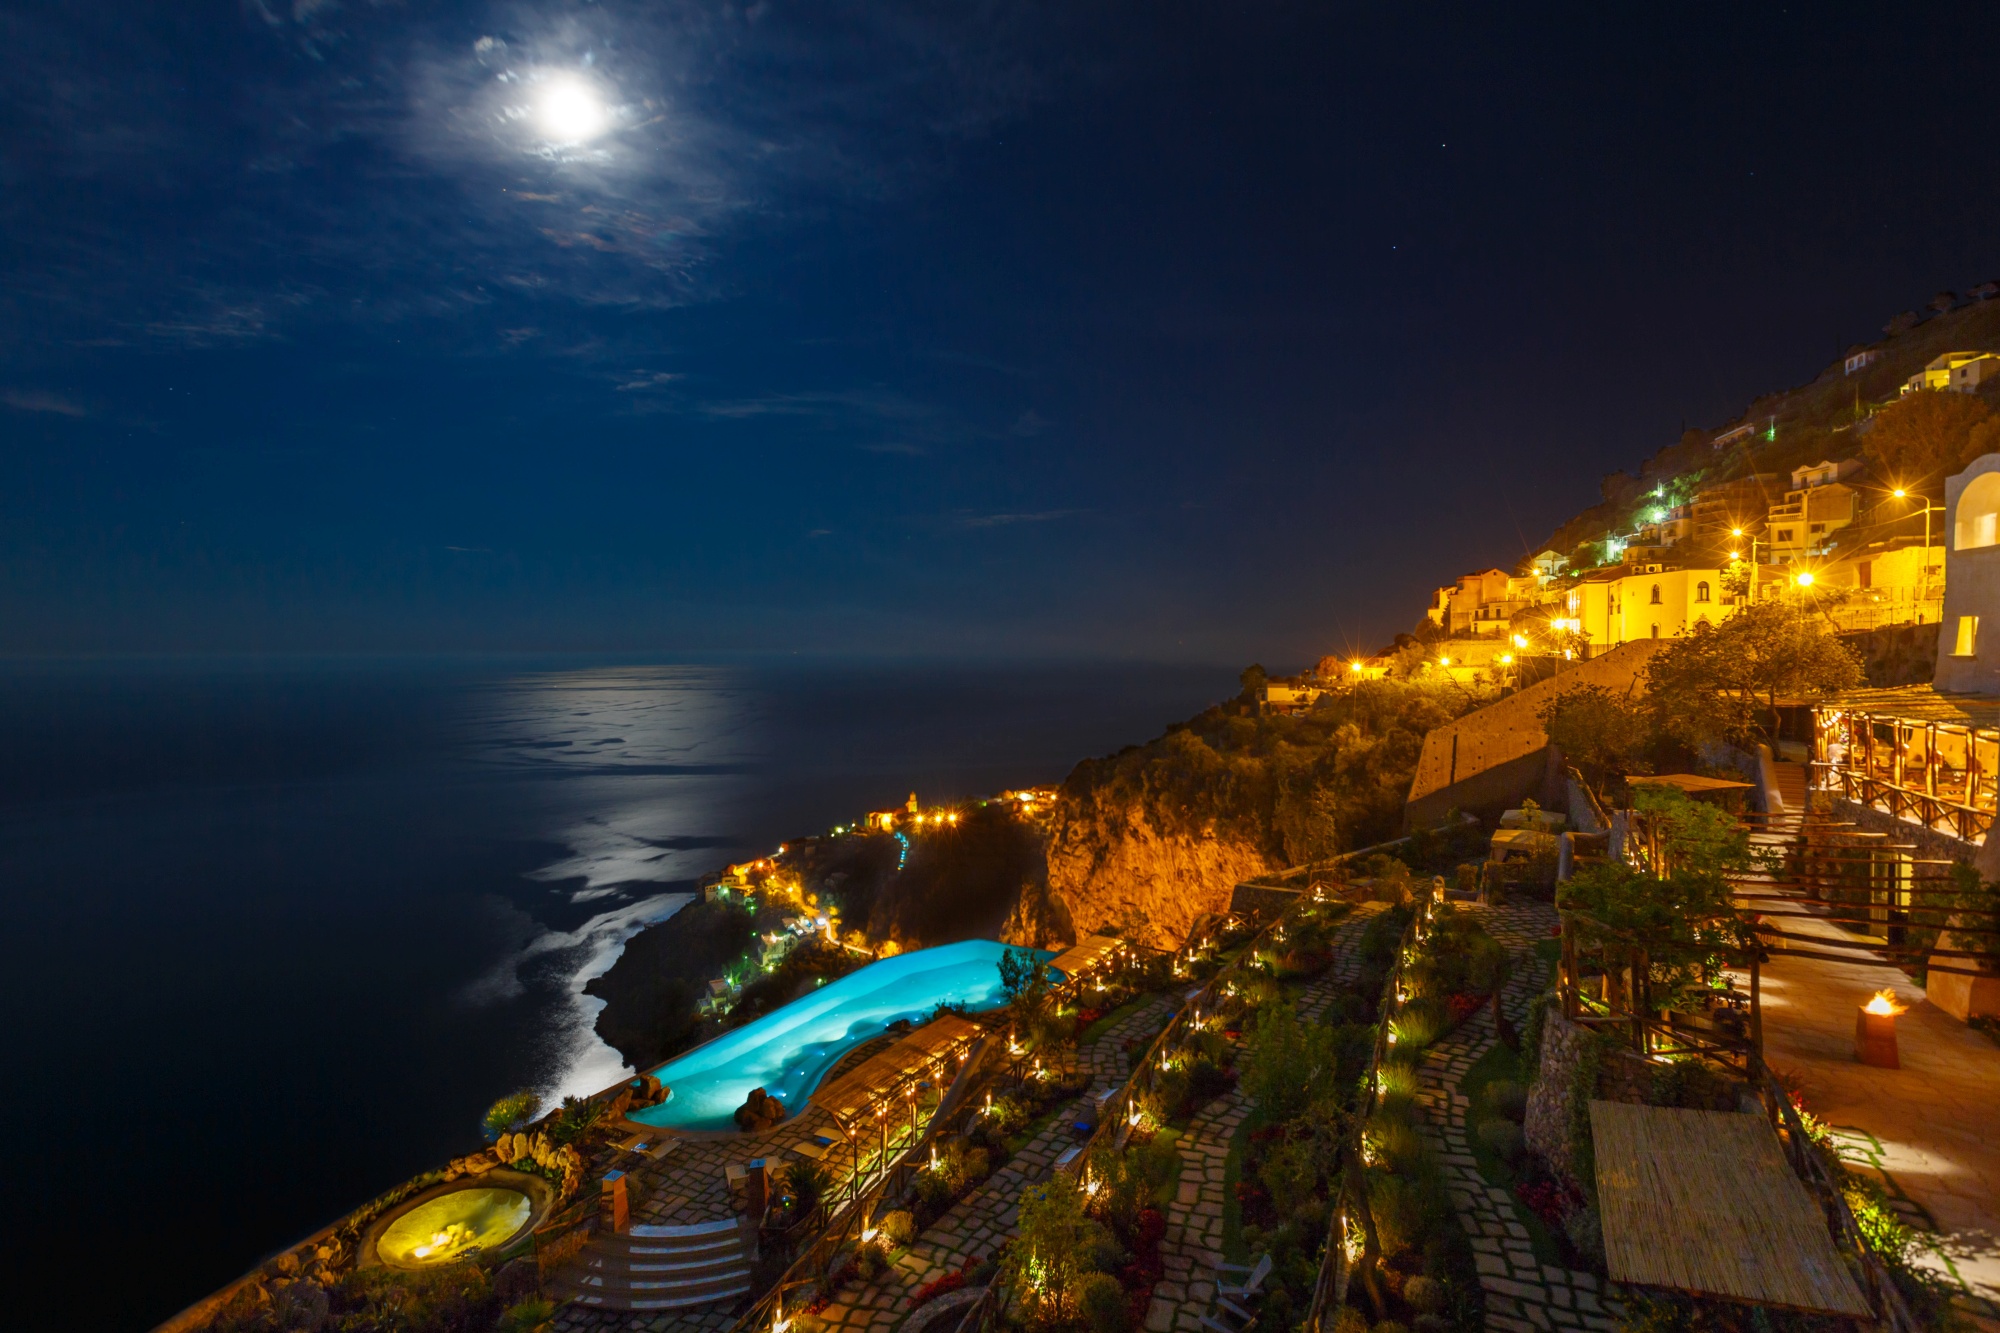 The Monastero Santa Rosa Hotel Spa Striking Views the Amalfi Coast